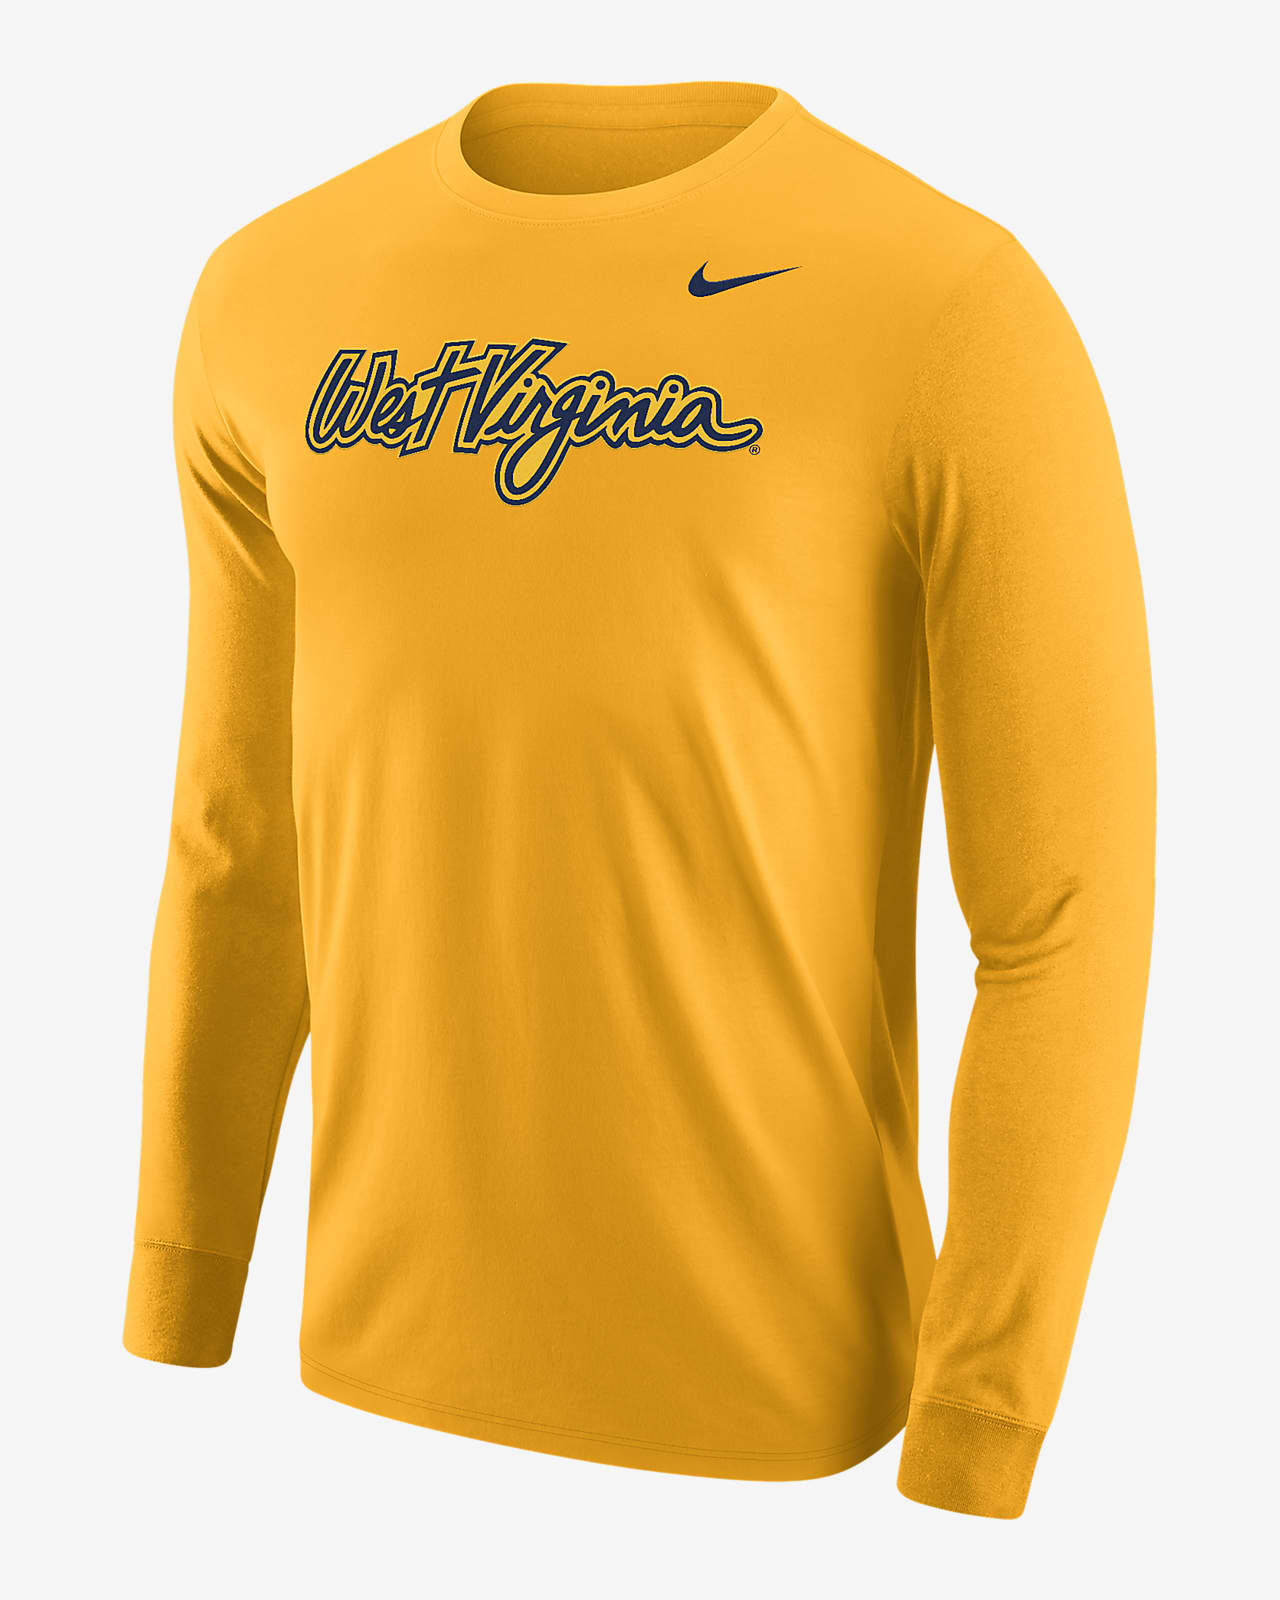 West Virginia Men's Nike College Long-Sleeve T-Shirt